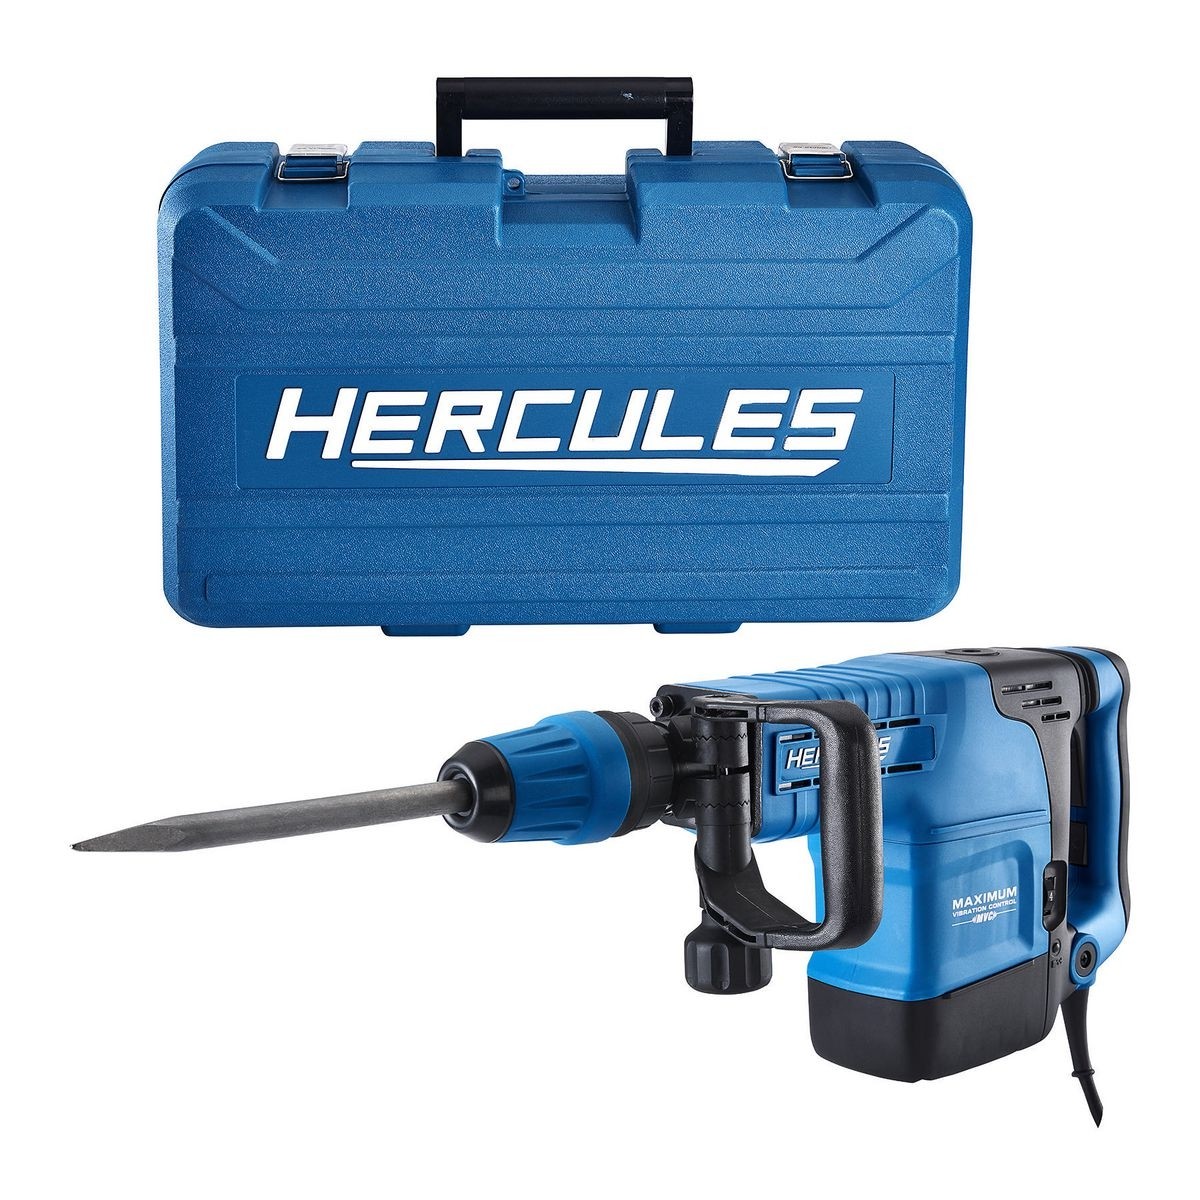 HERCULES 14.5 Amp 23 Lb. SDS Max-Type Demolition Hammer – Item 56843